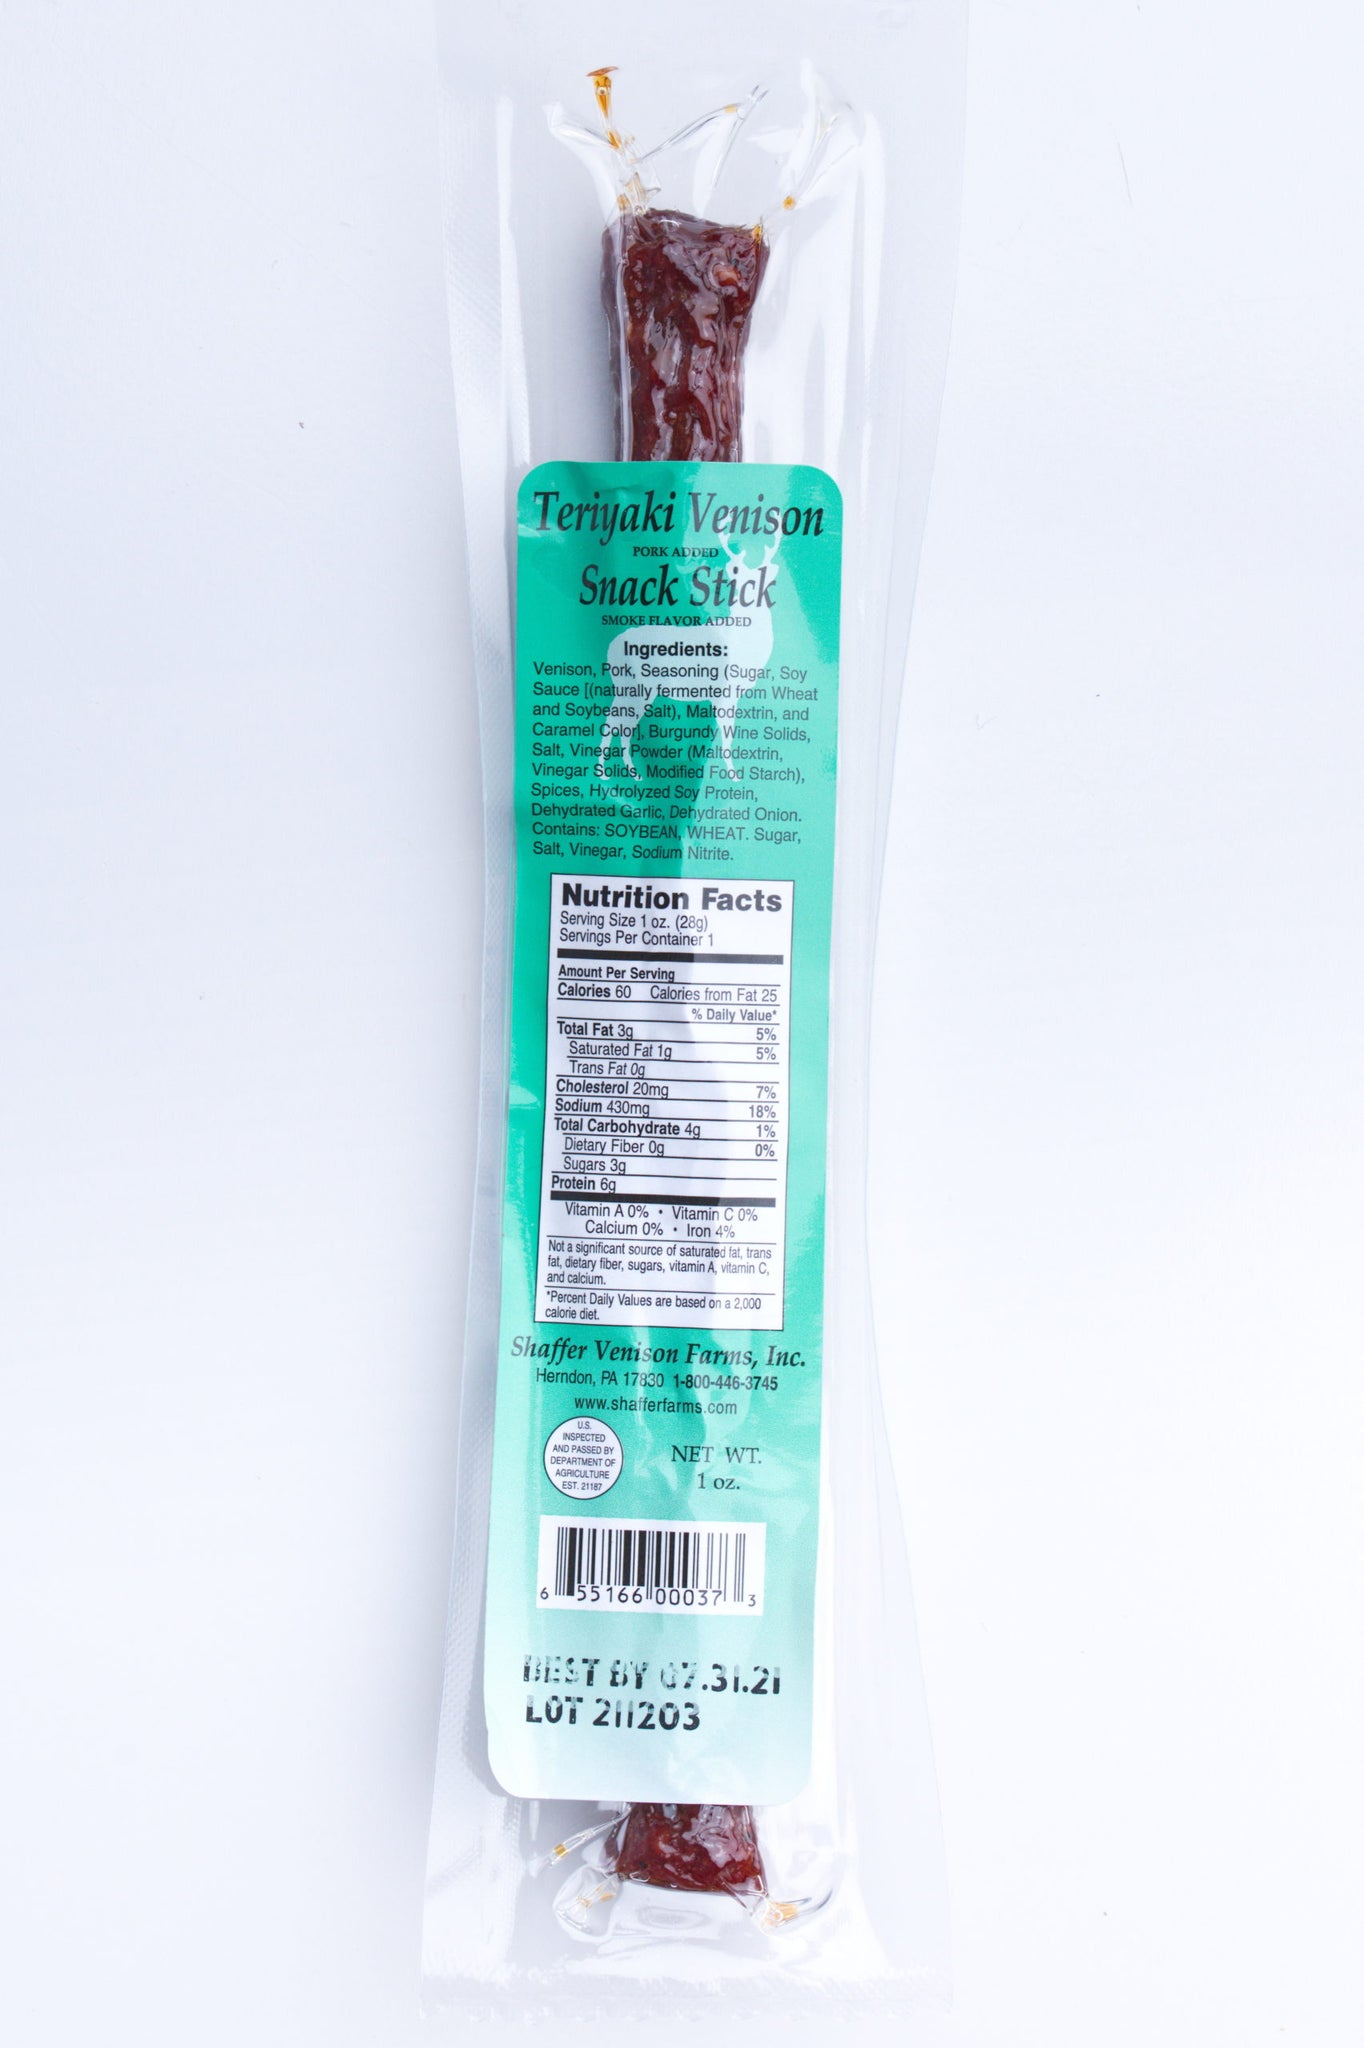 Packaged Teriyaki Venison Snack Stick